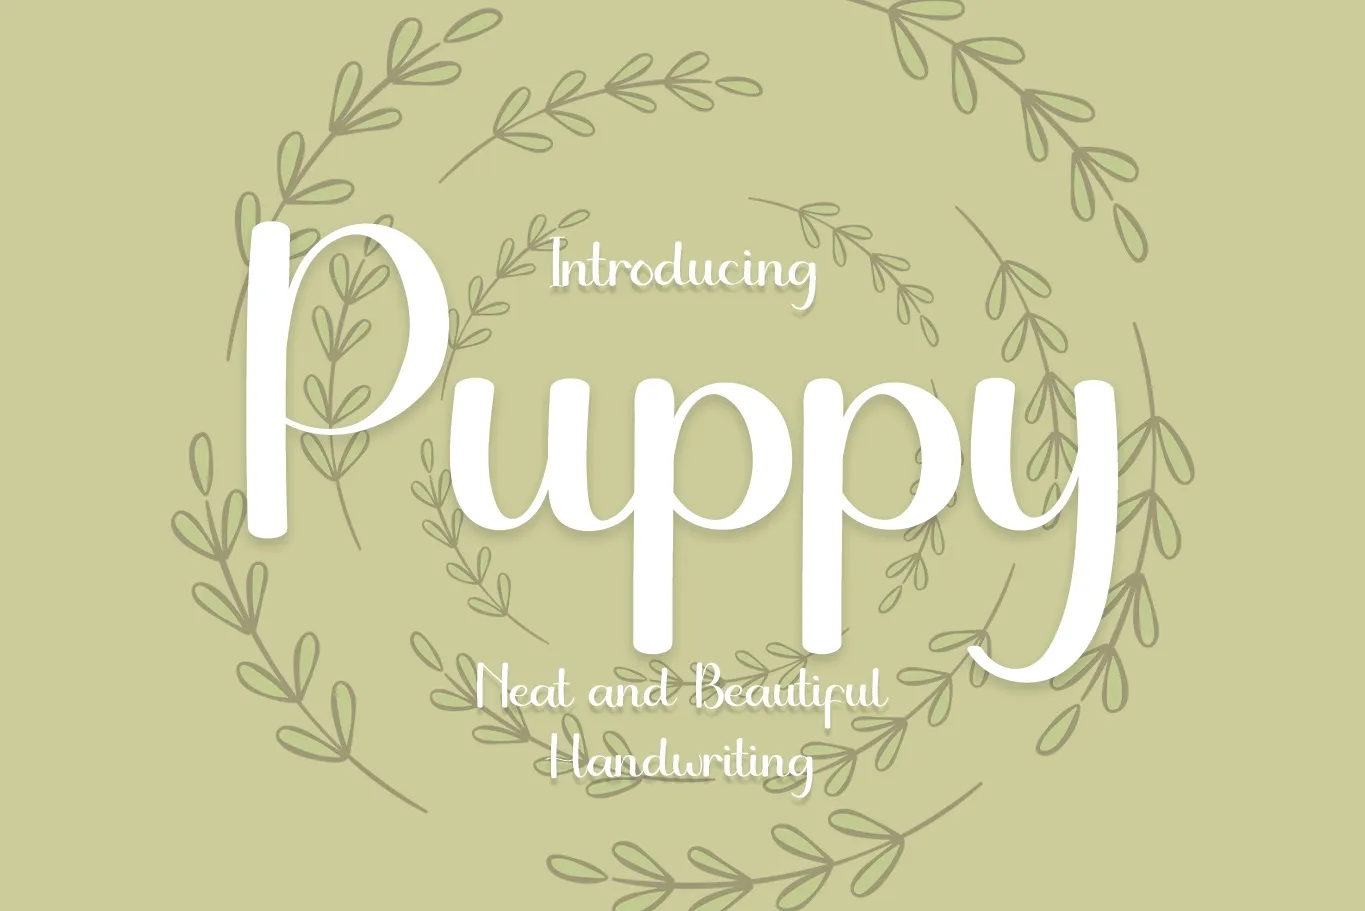 Puppy Font